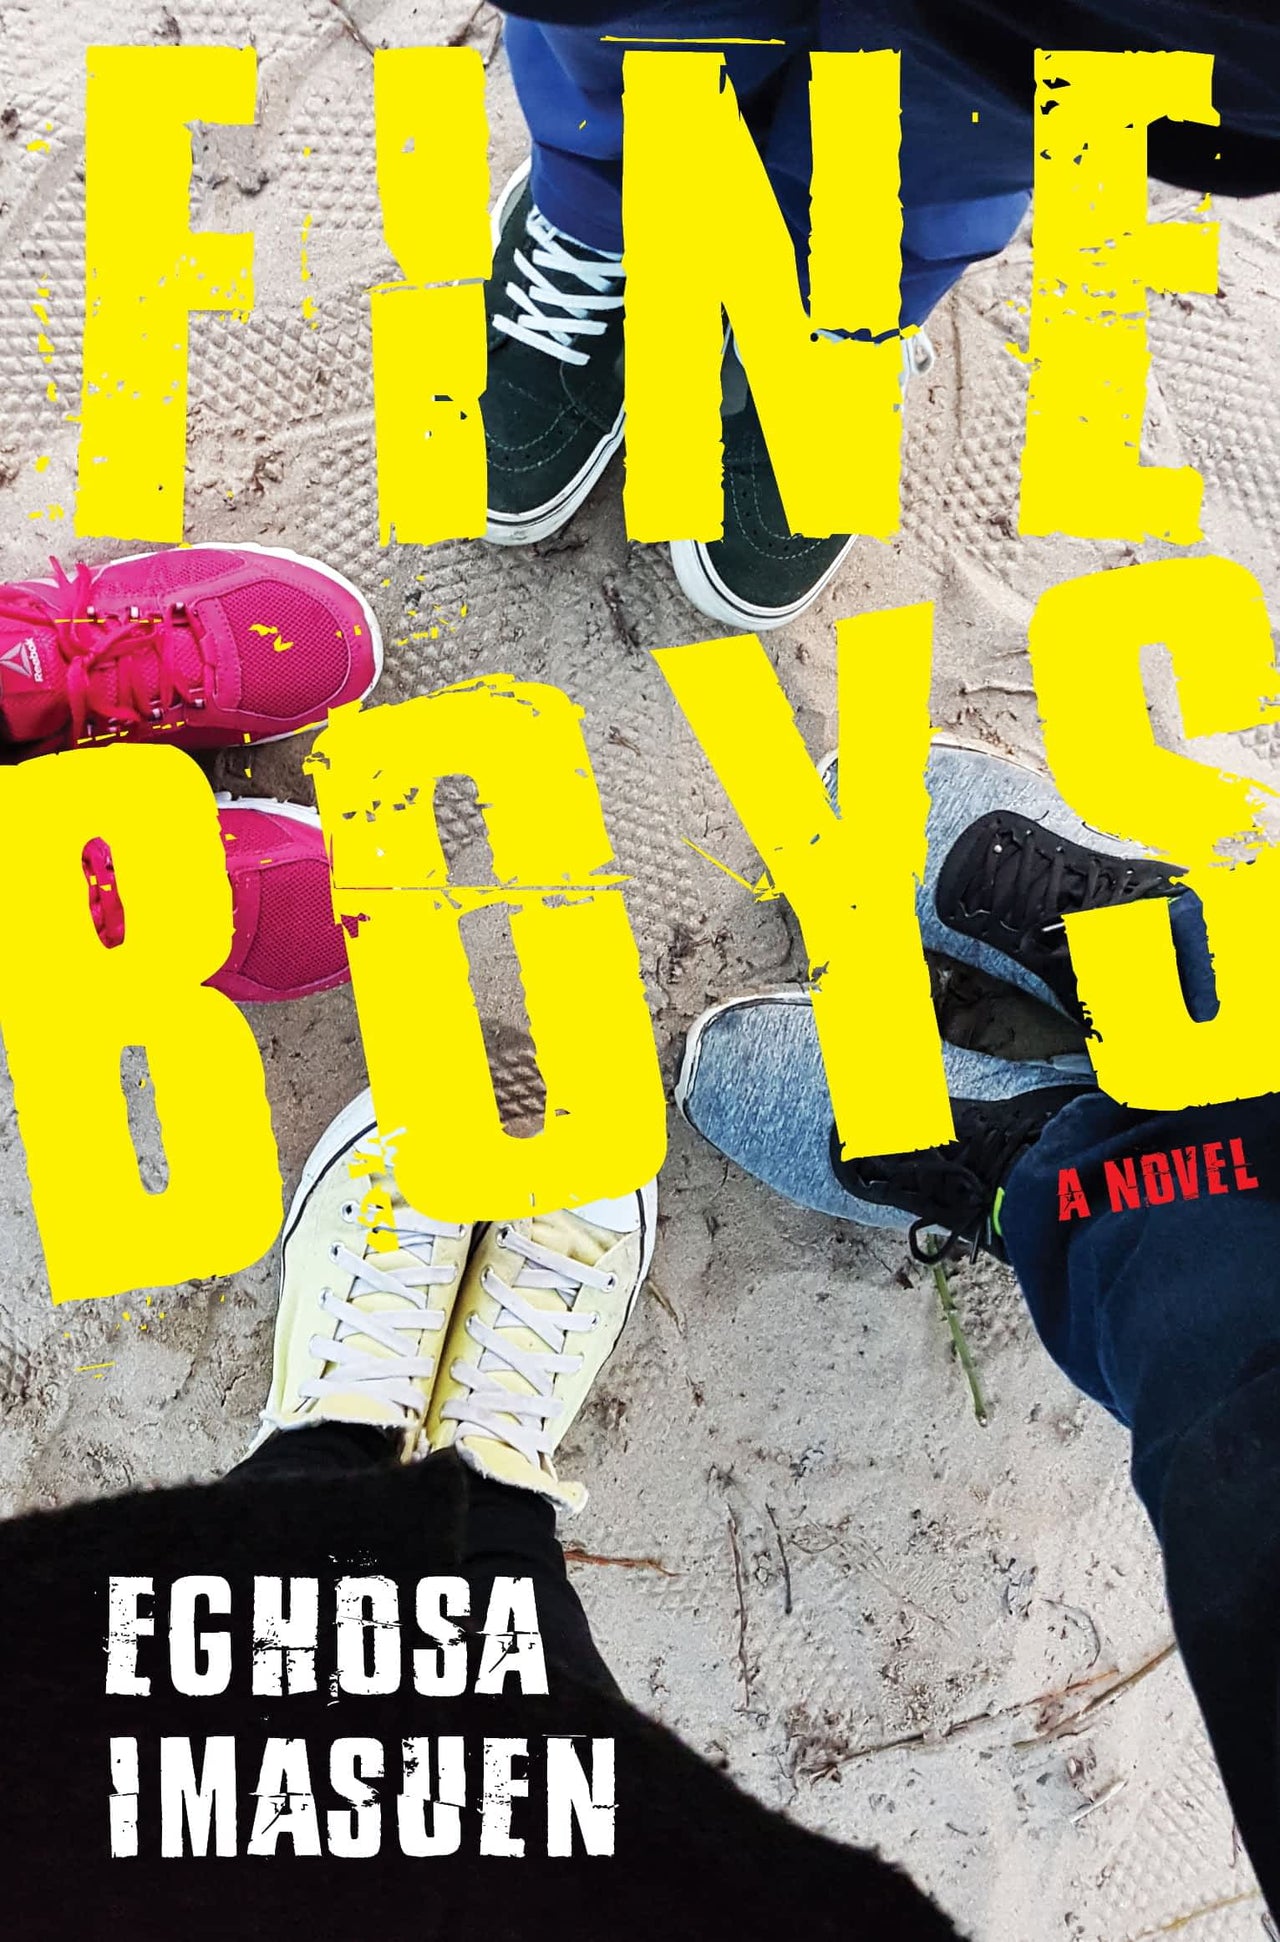 Fine Boys (Revised Edition) by Eghosa Imasuen Master Kids Company  